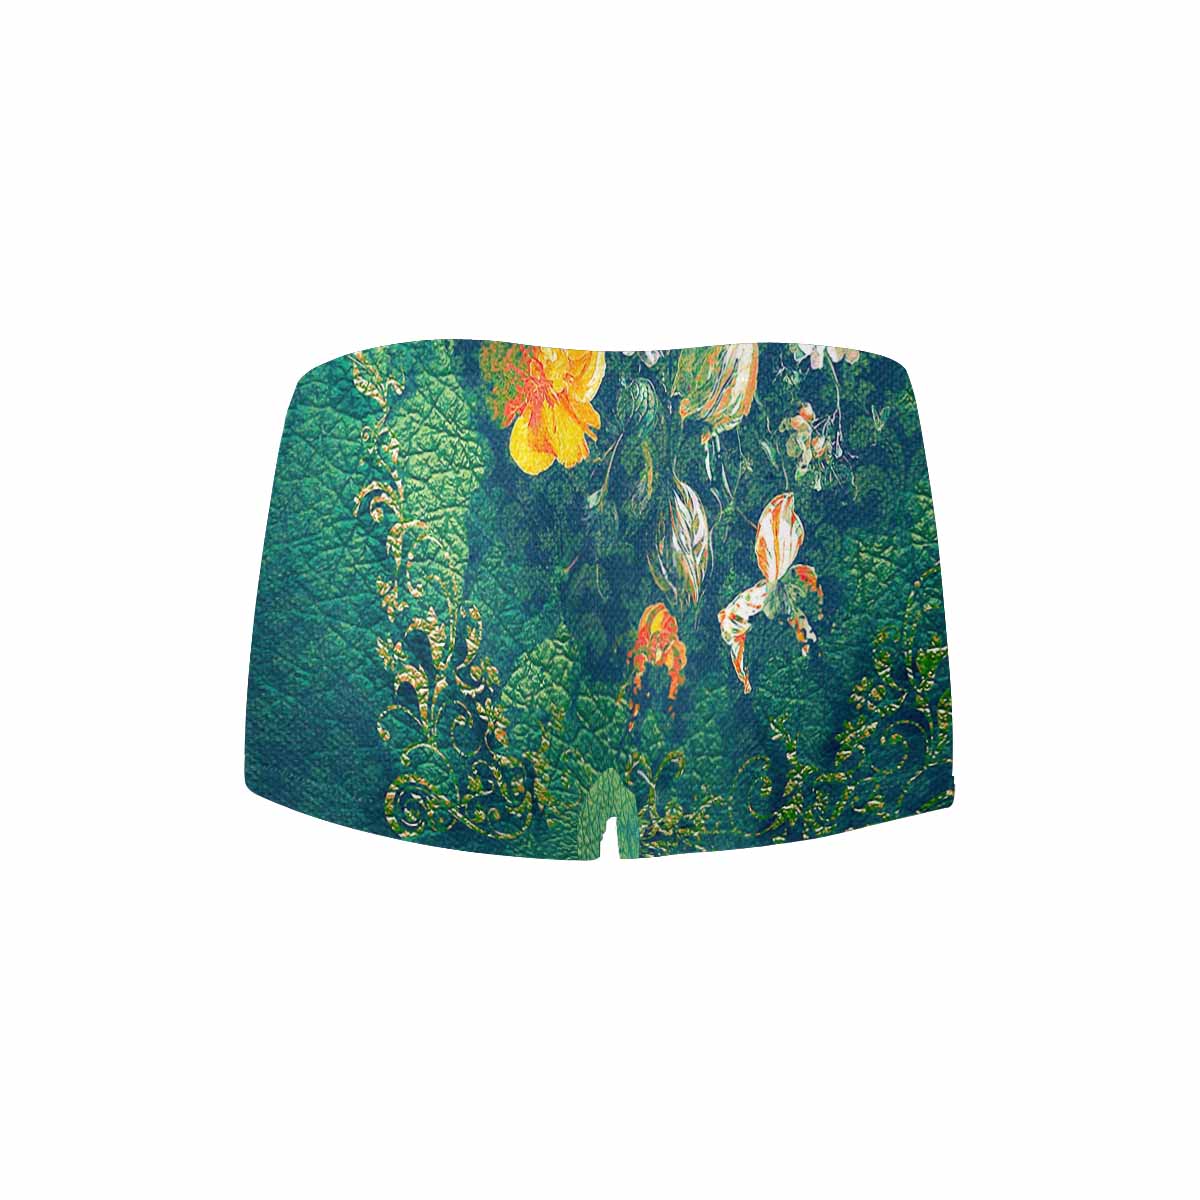 Antique general boyshorts, daisy dukes, pum pum shorts, panties, design 13